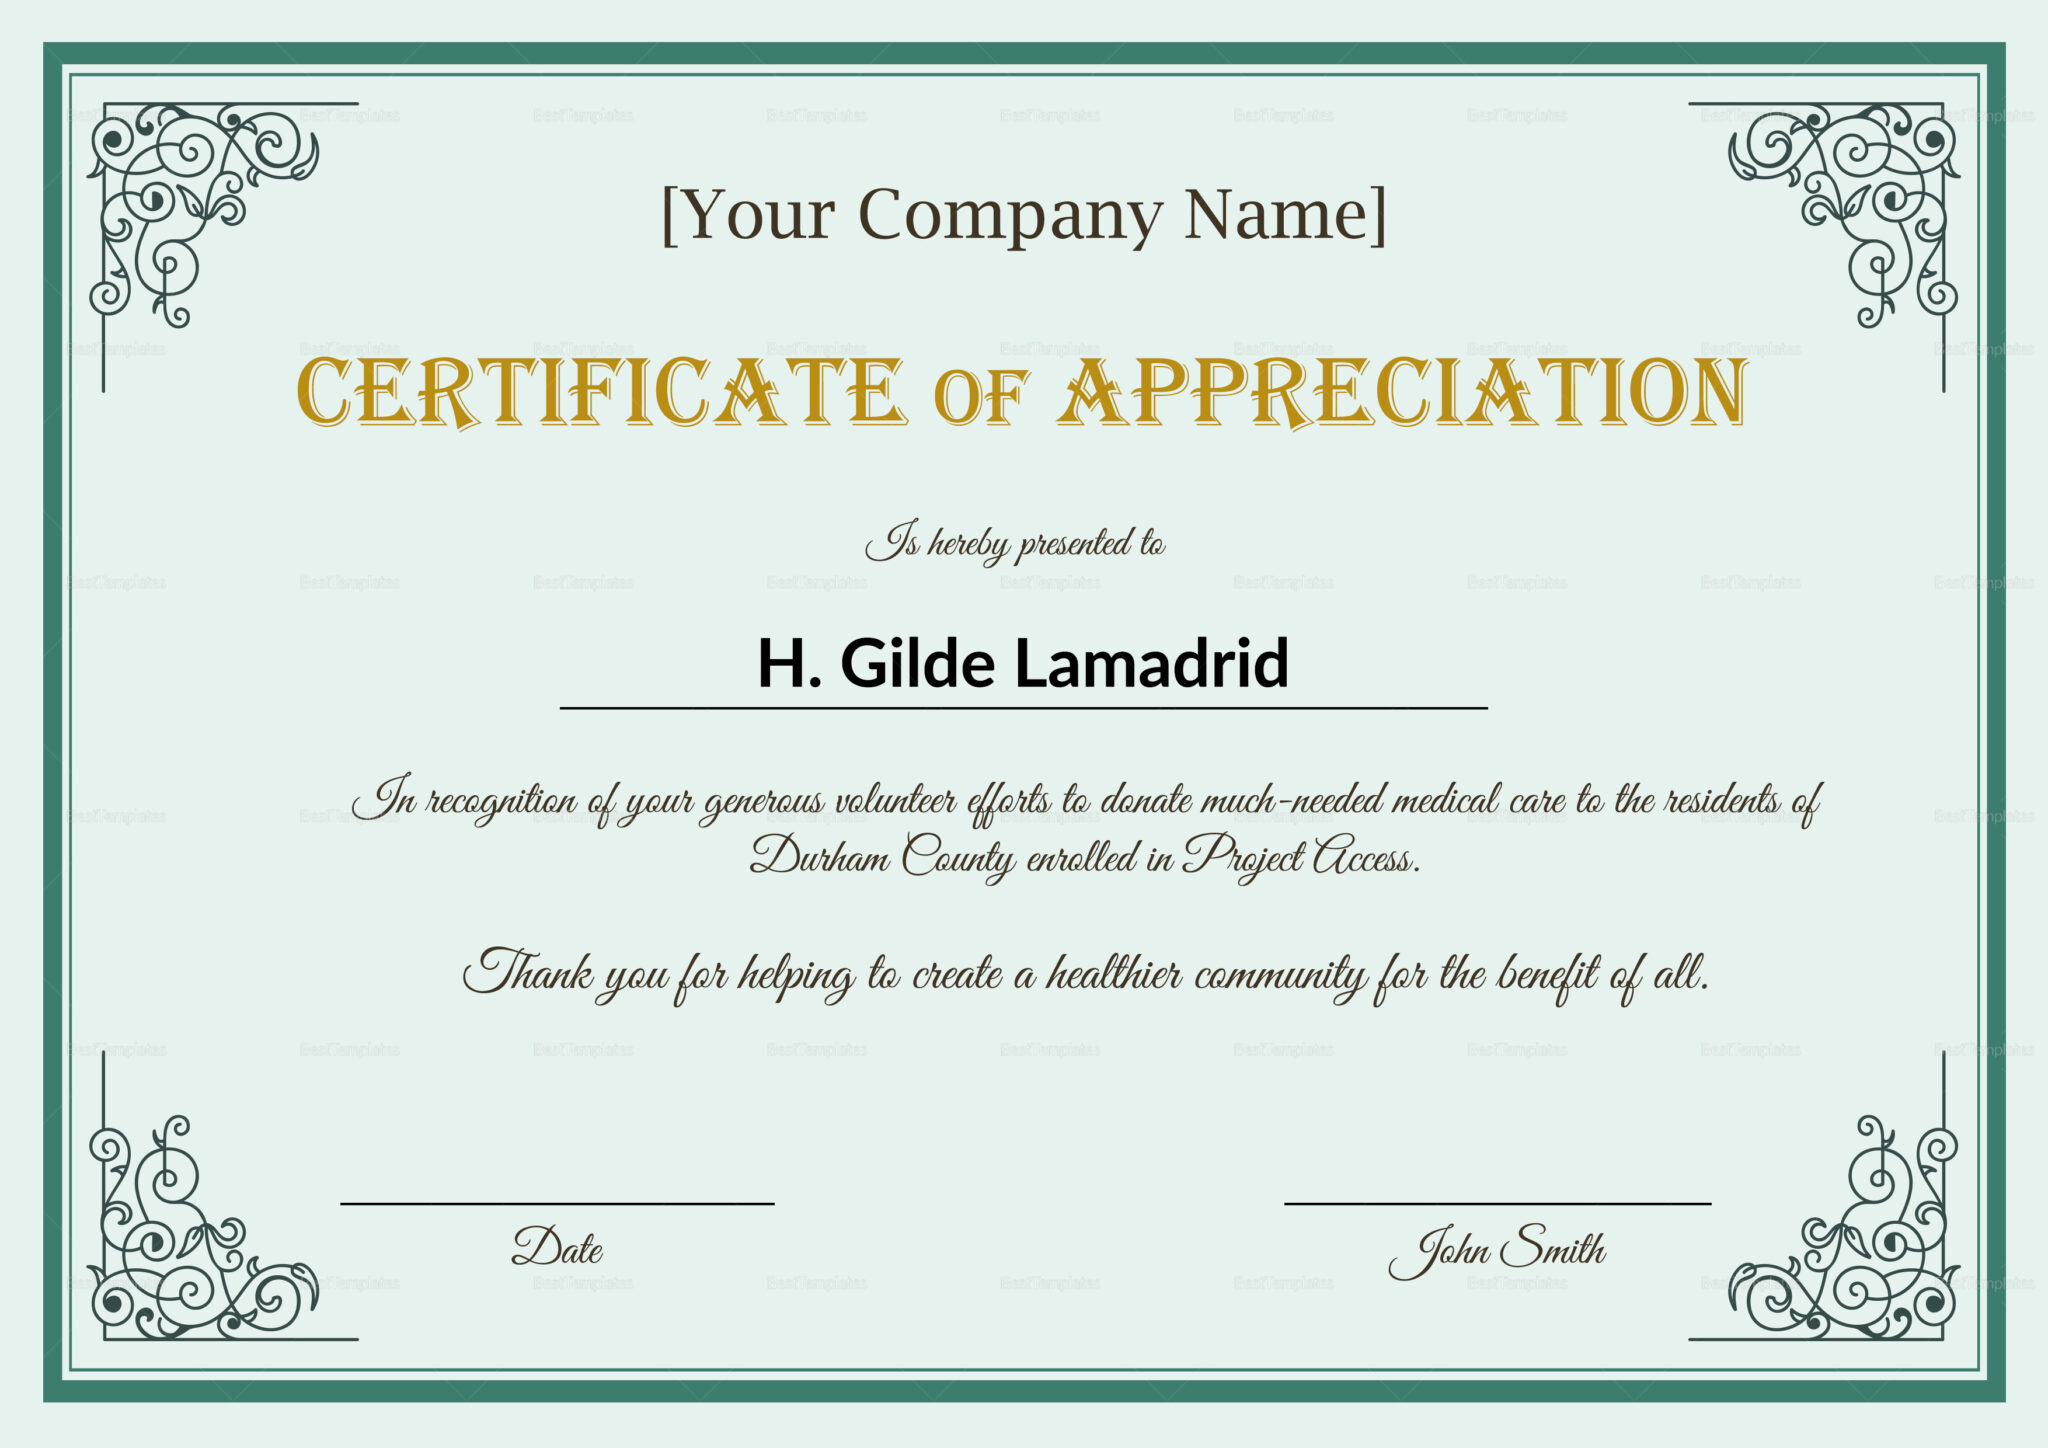 picnie-create-best-employee-award-certificate-image-online